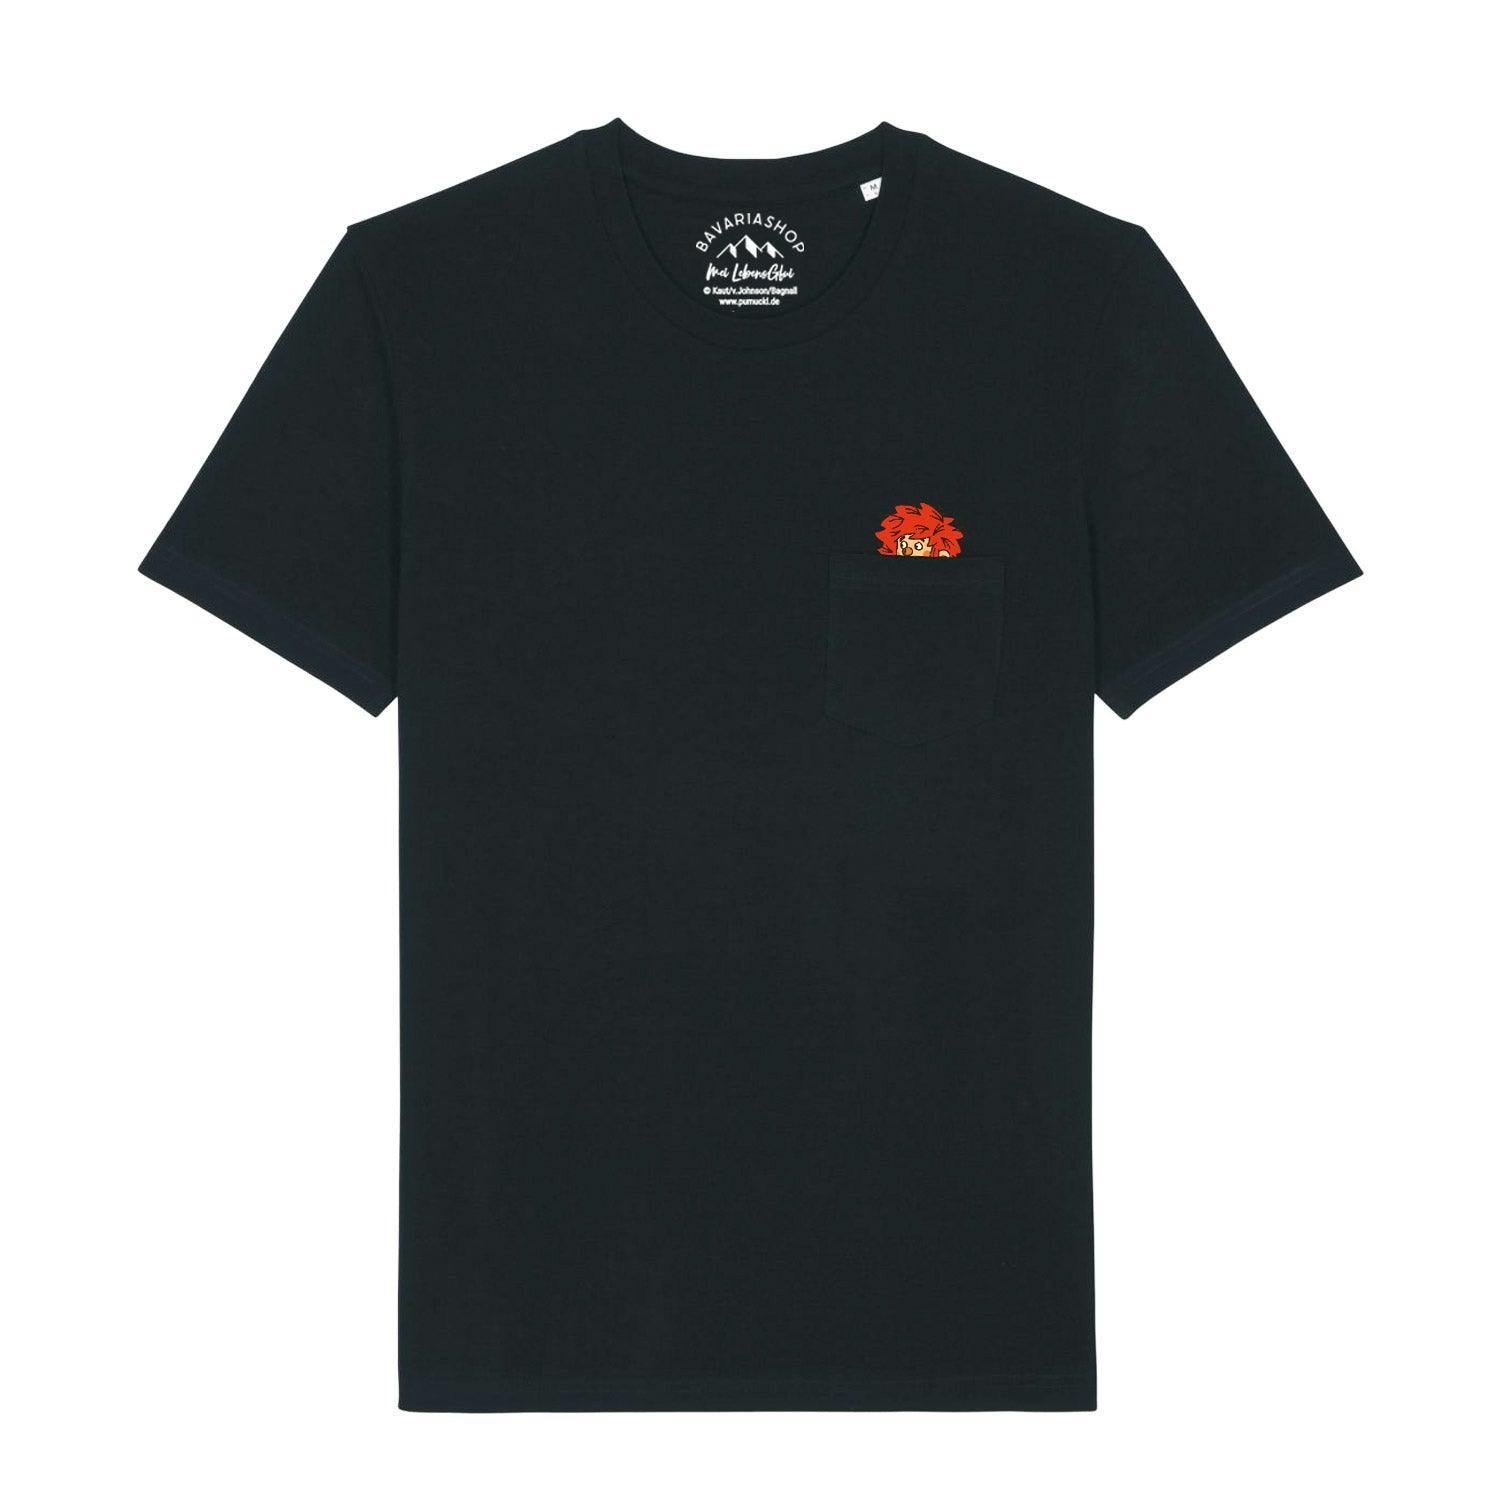 ®Pumuckl T-Shirt "Schabernack" - bavariashop - mei LebensGfui